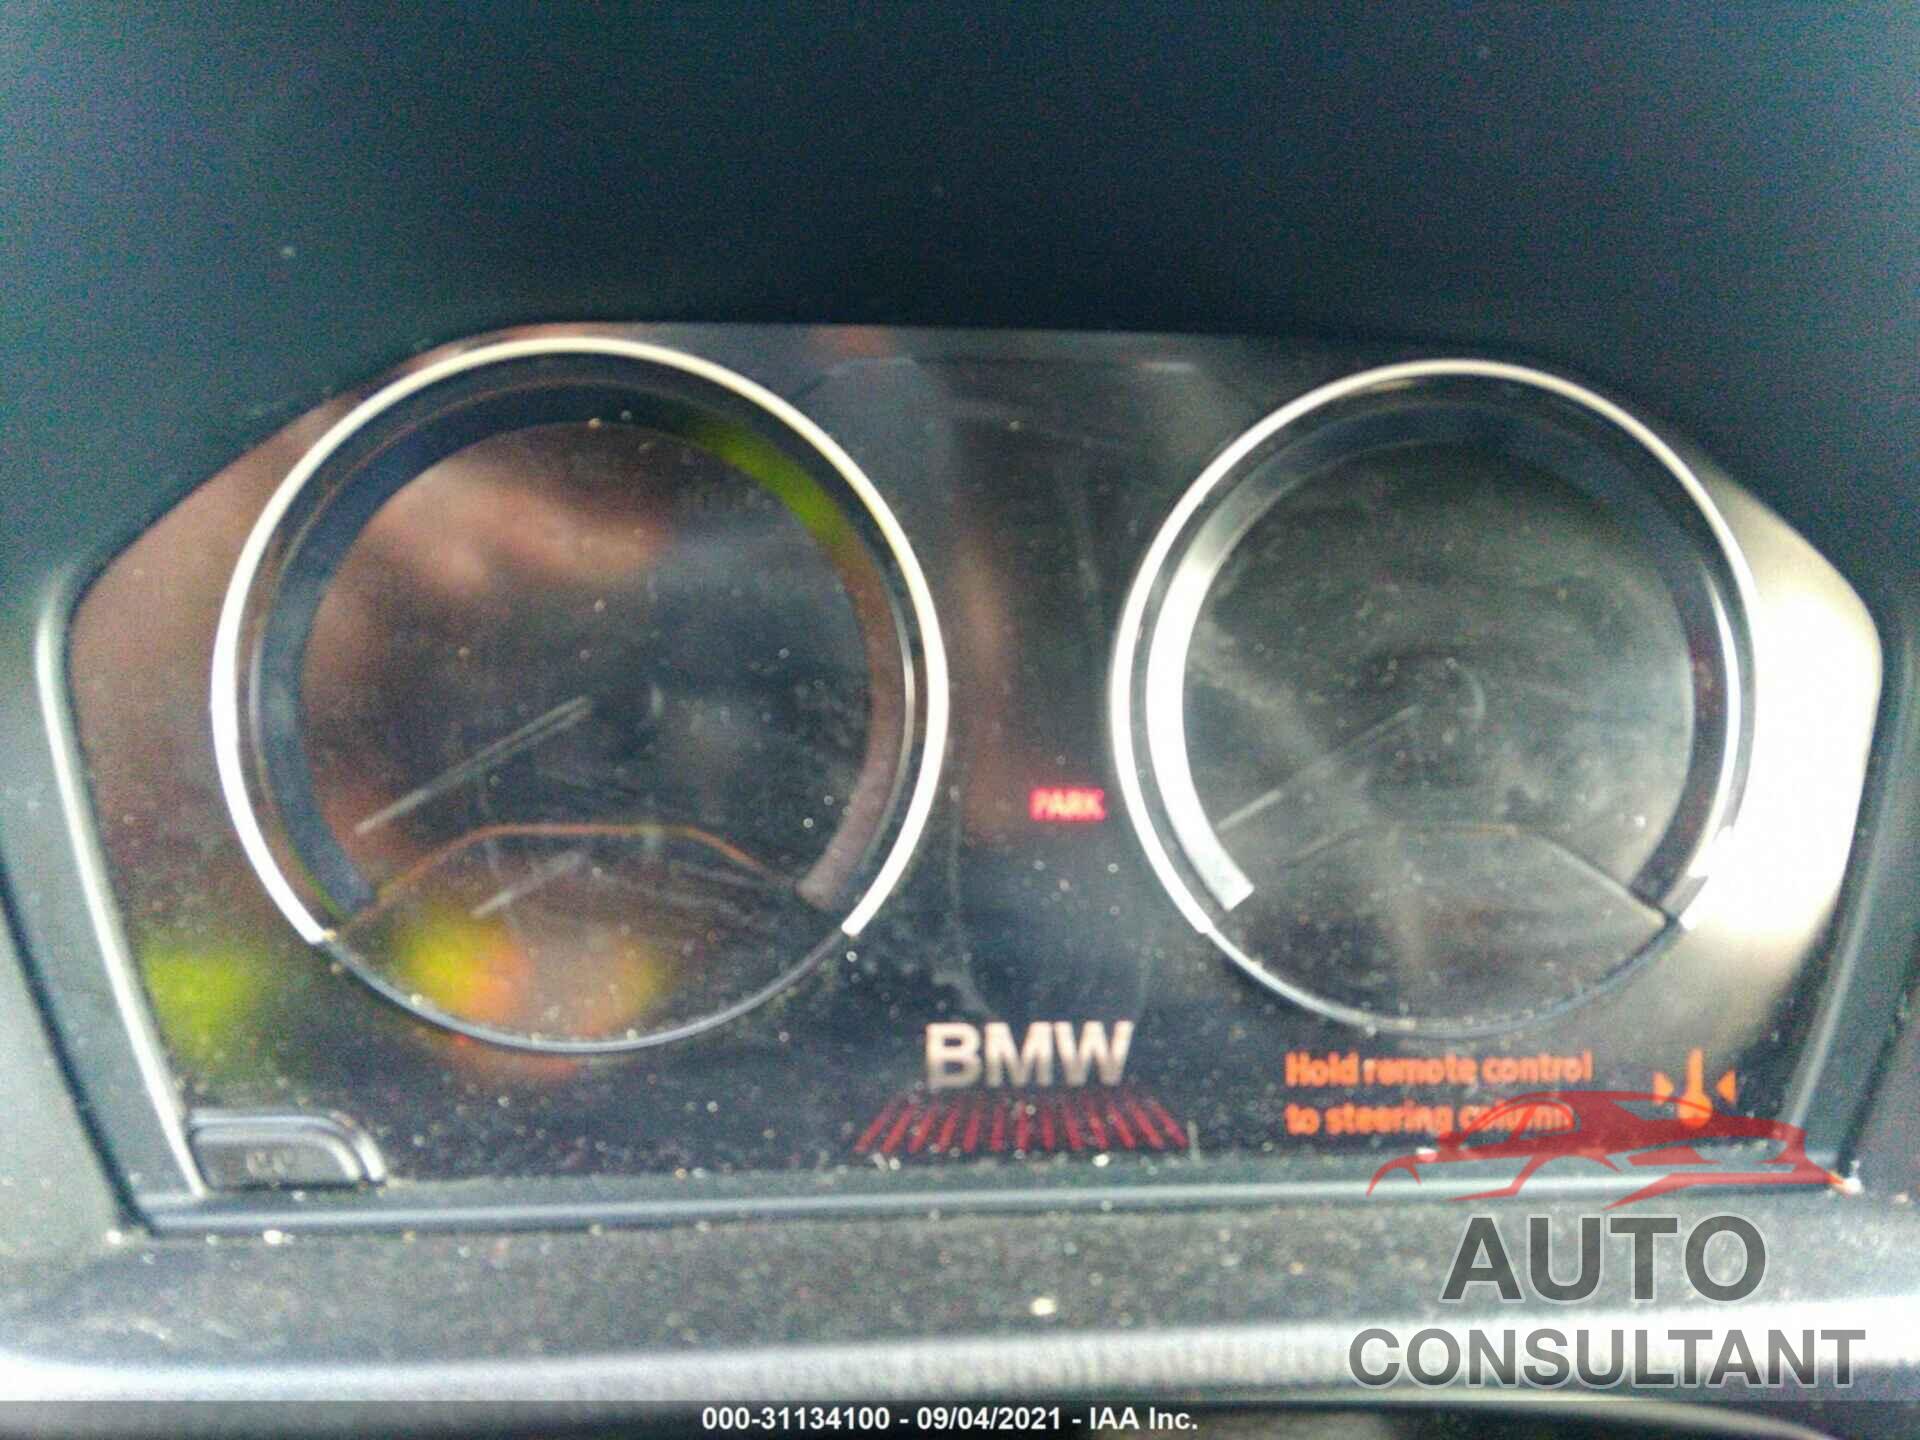 BMW X1 2020 - WBXJG9C00L5R30197